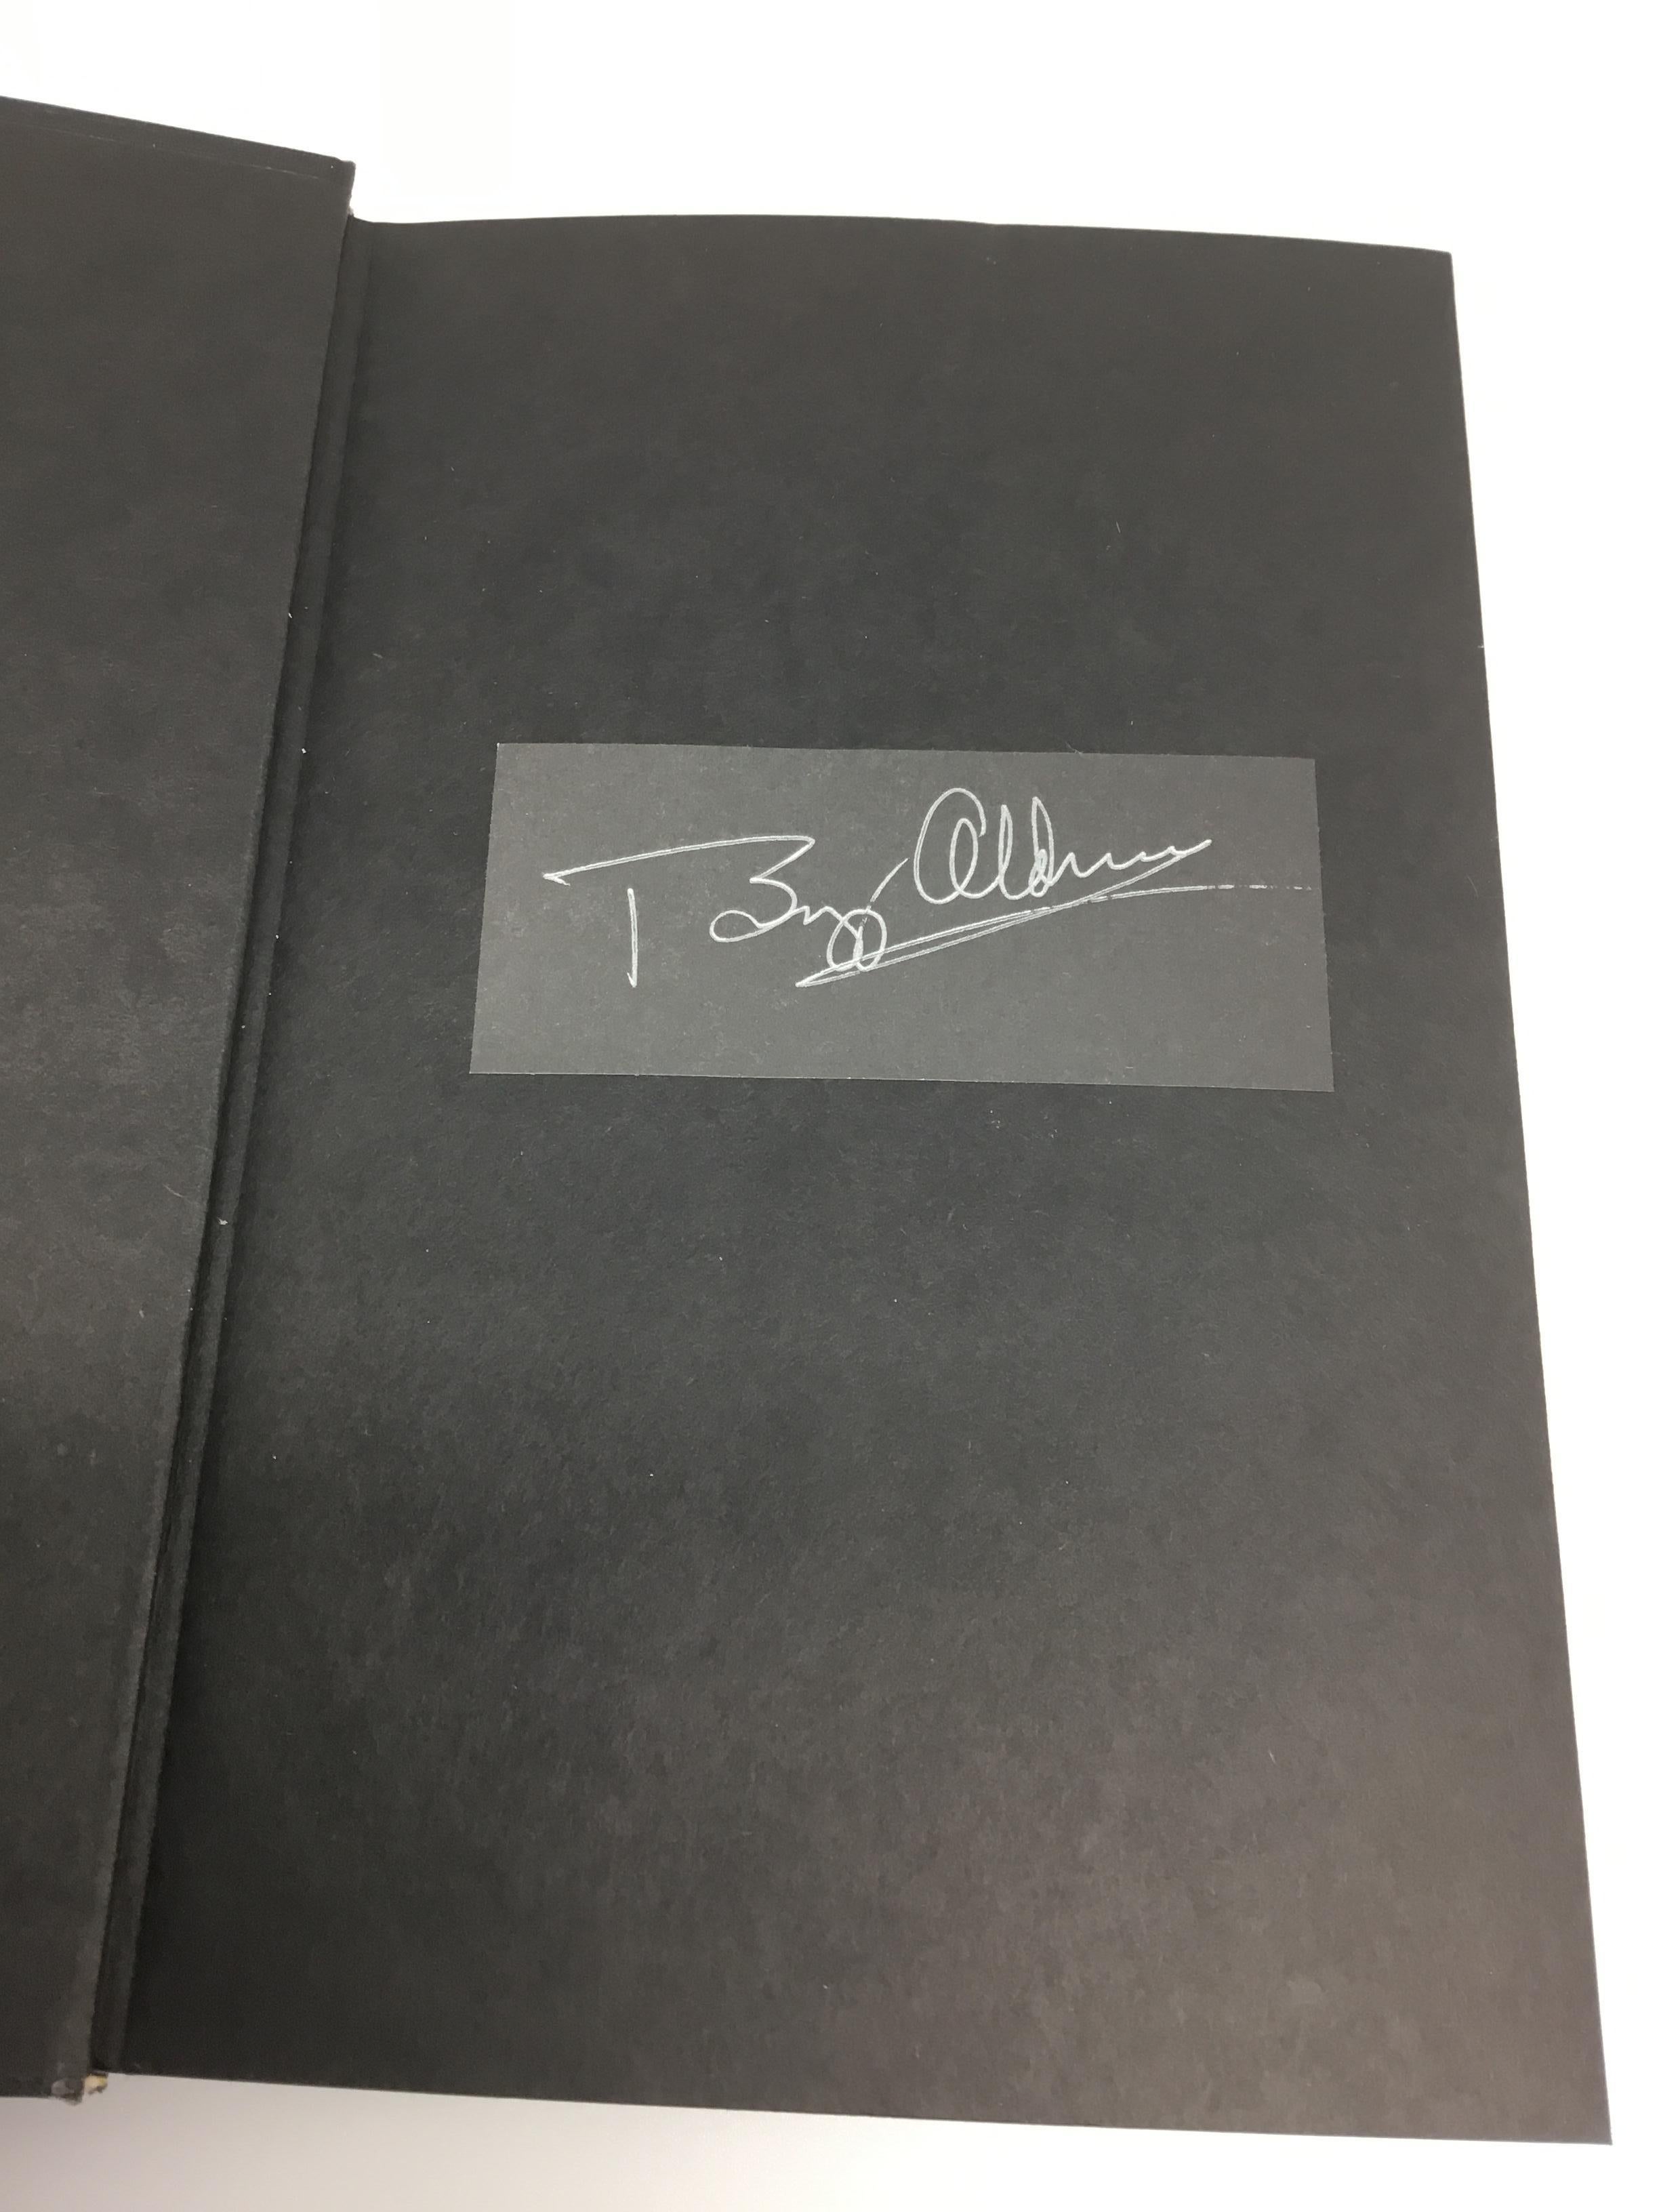 buzz aldrin autographed book